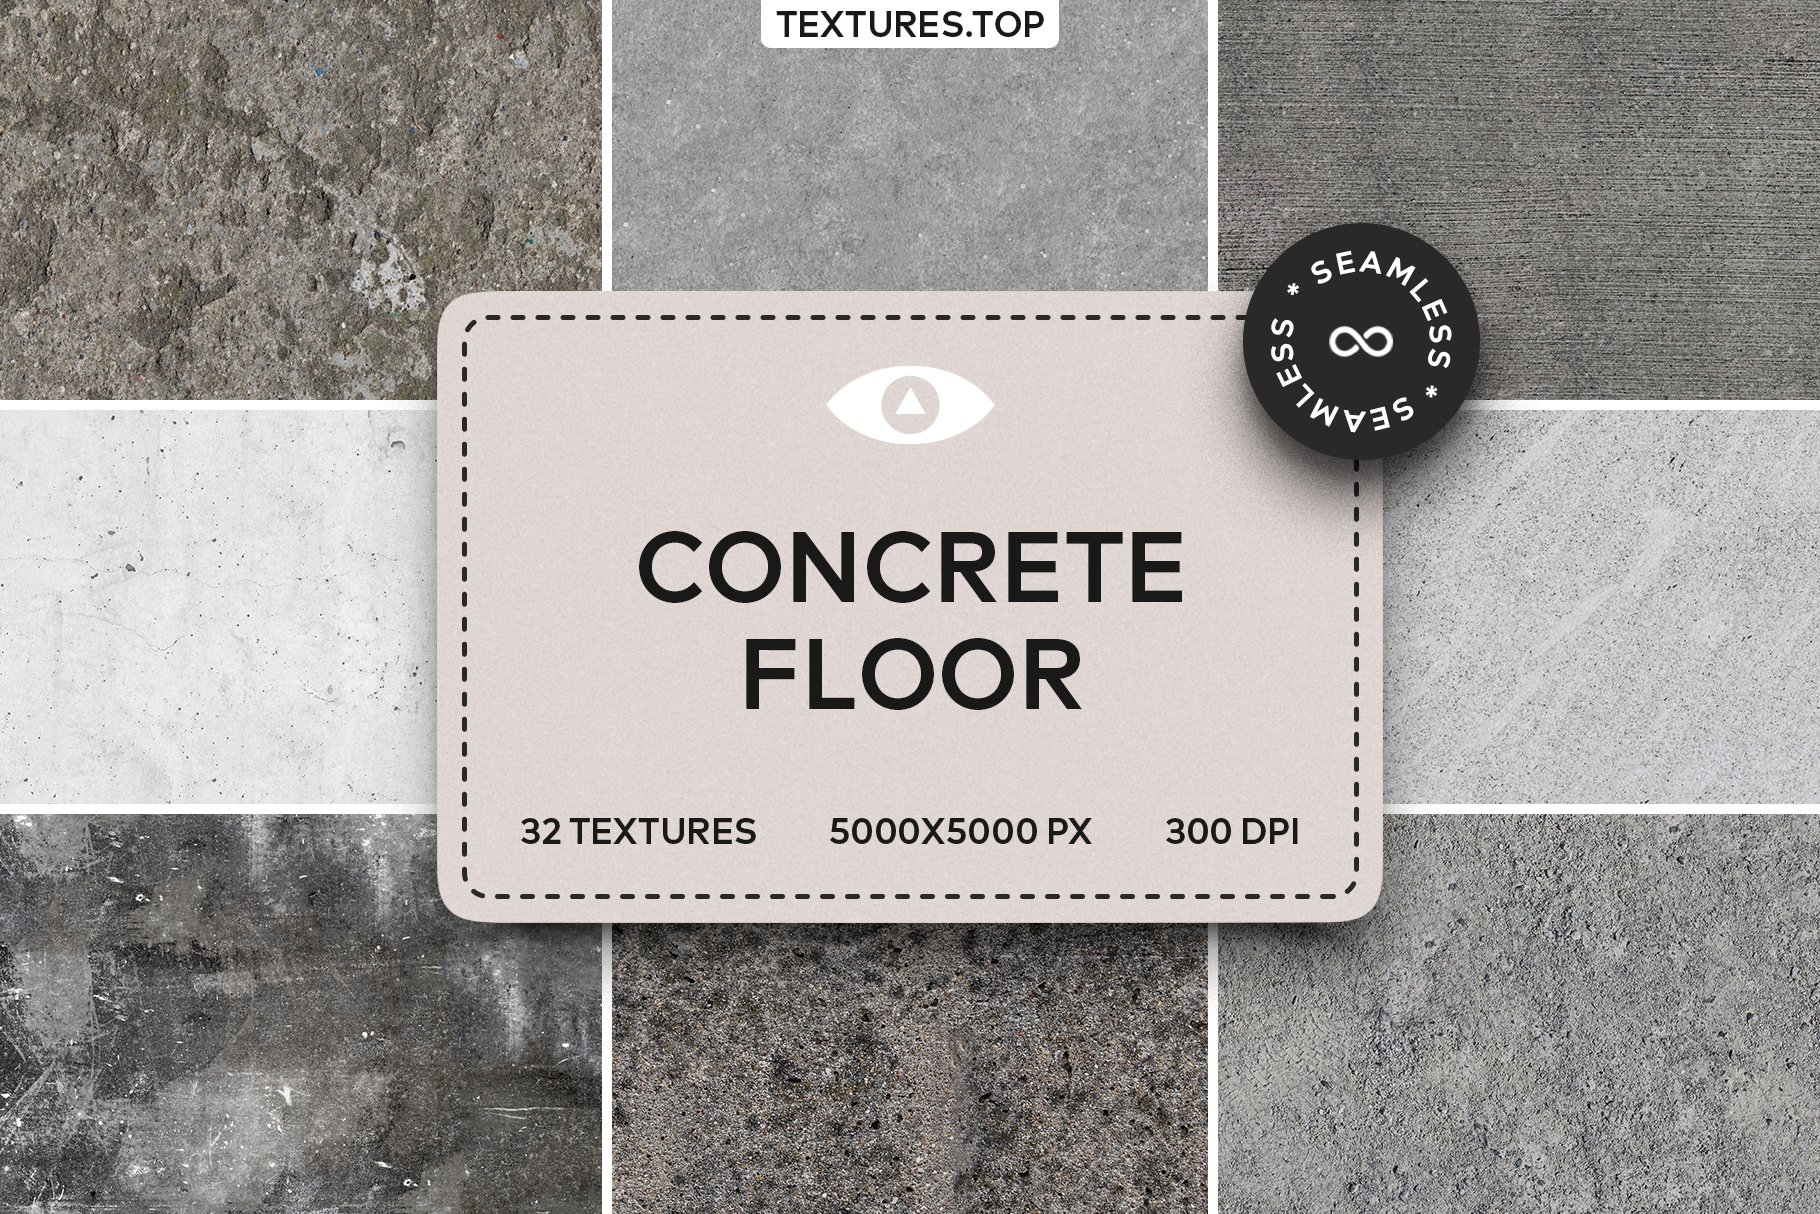 32 Seamless Concrete Floor Textures cover image.